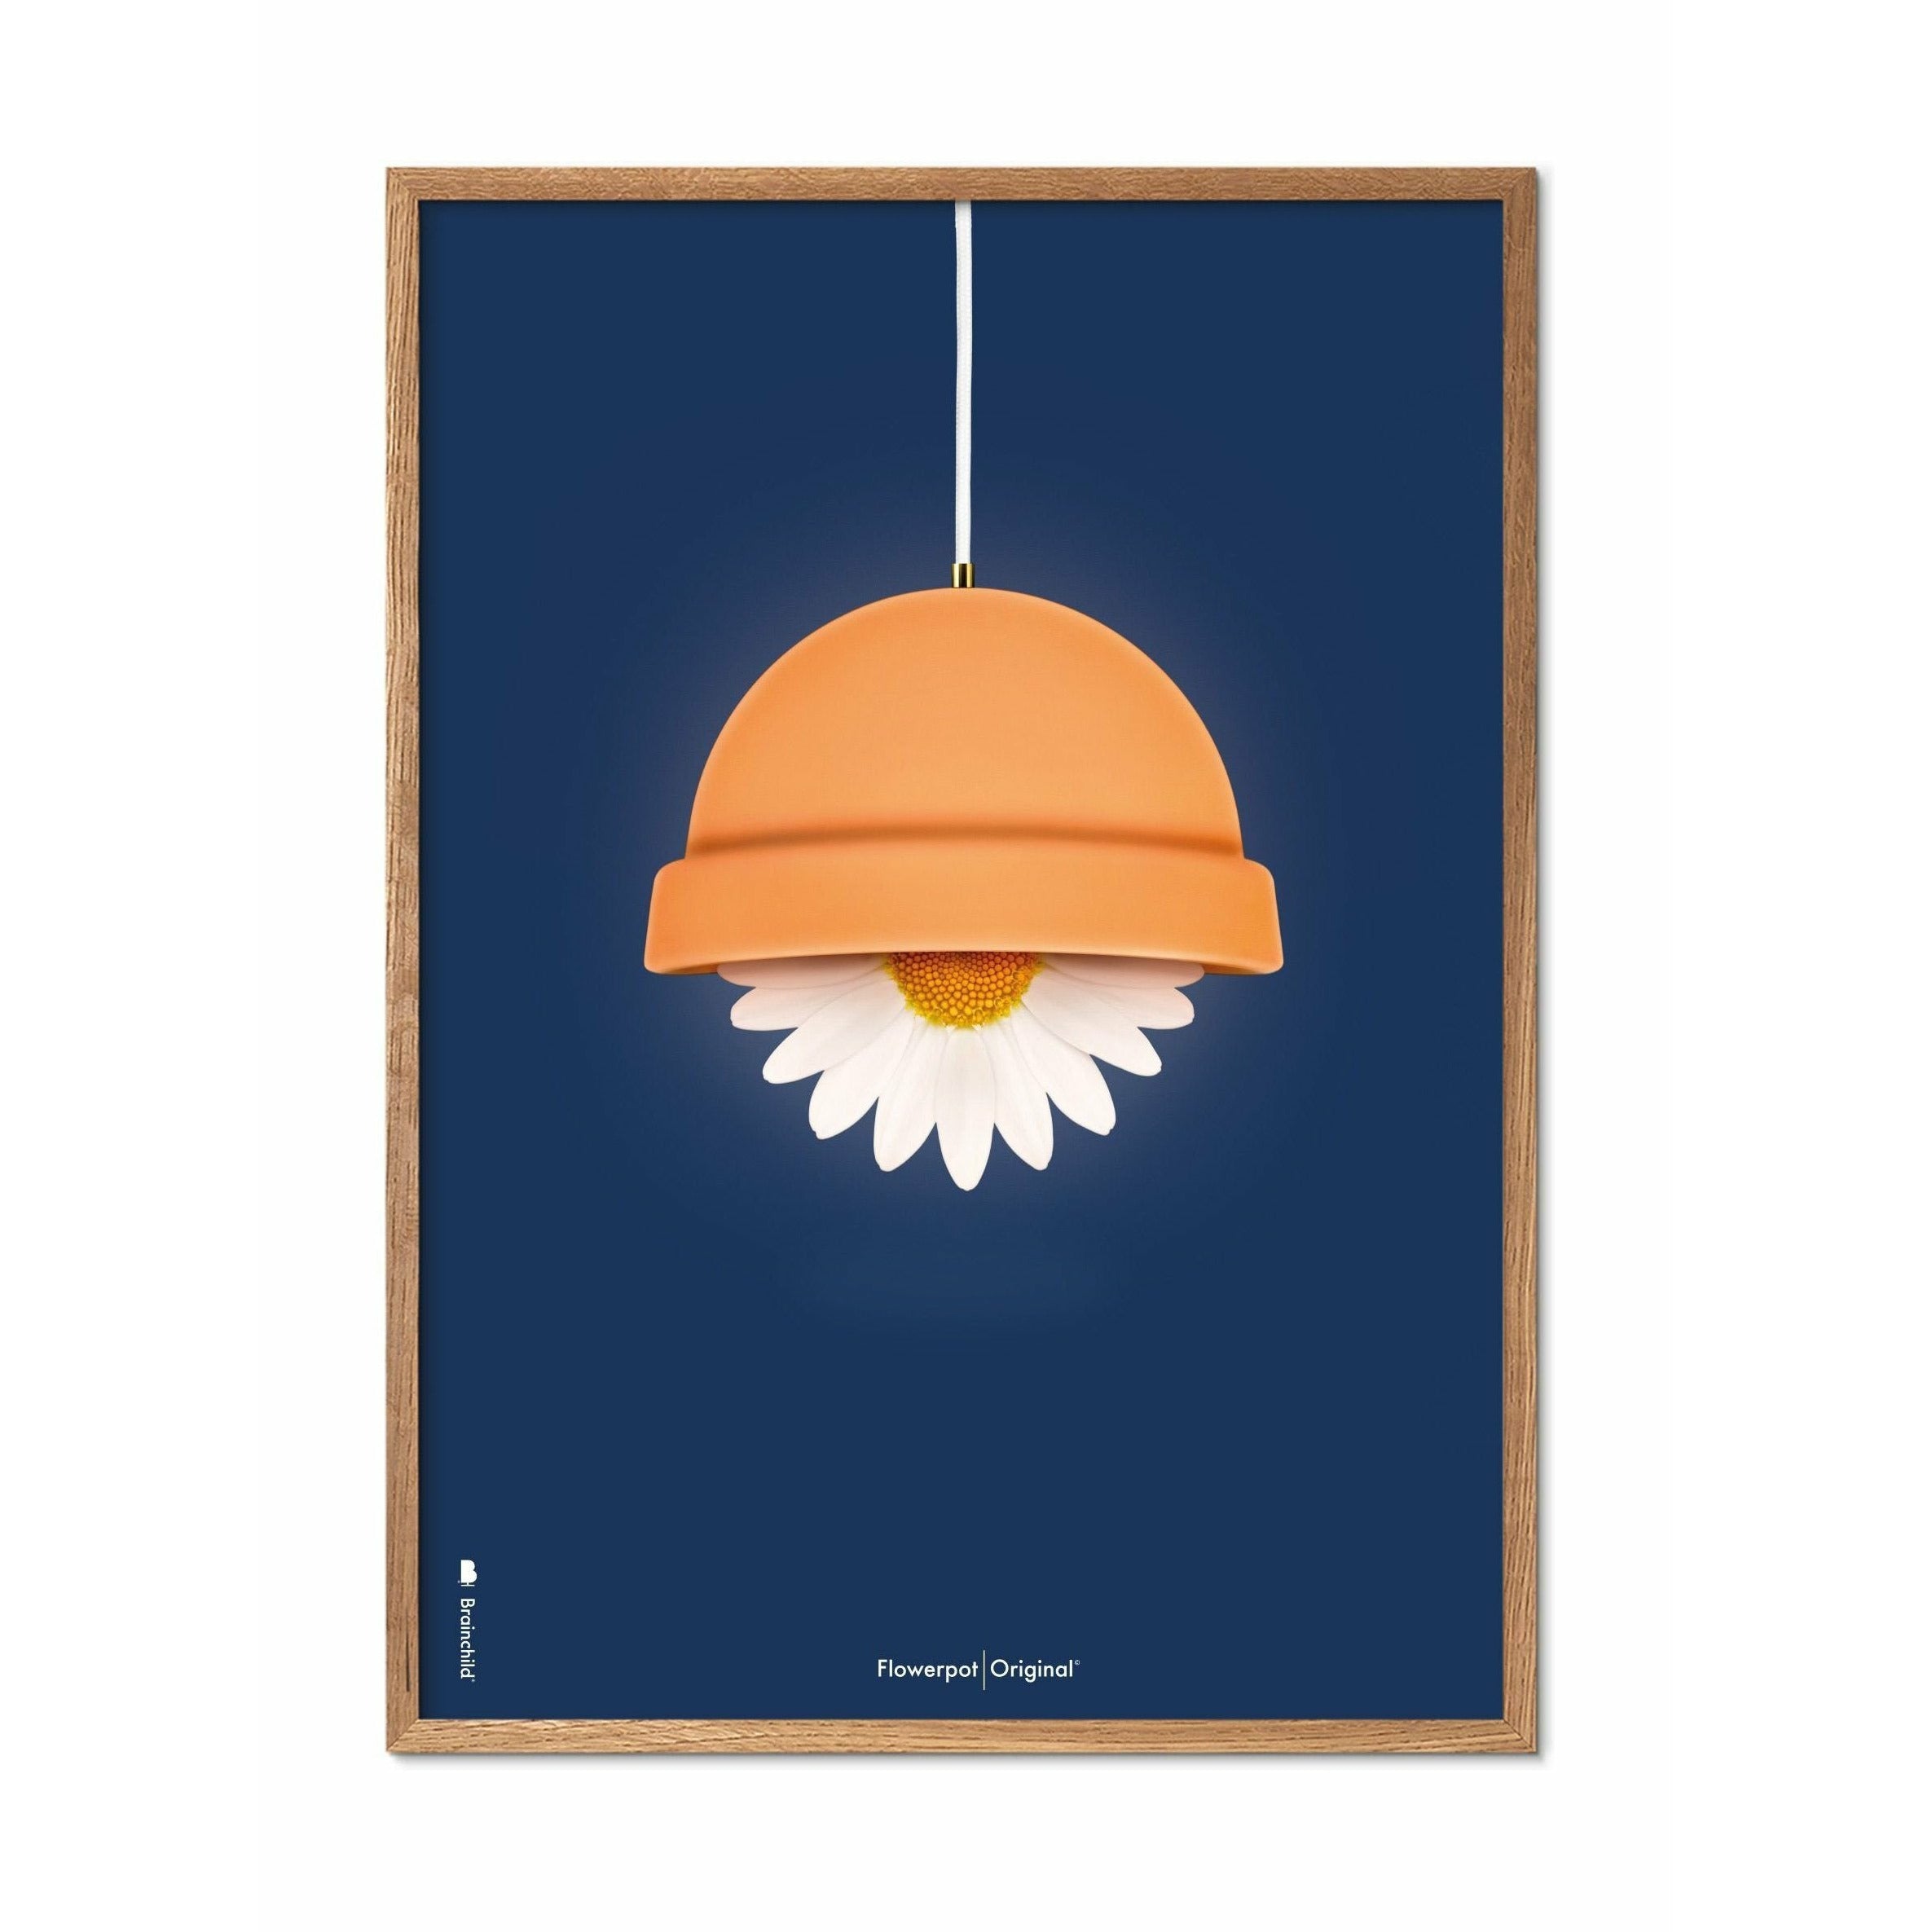 Brainchild Flowerpot Klassisk Plakat, Ramme I Lyst Træ A5, Mørkeblå Baggrund